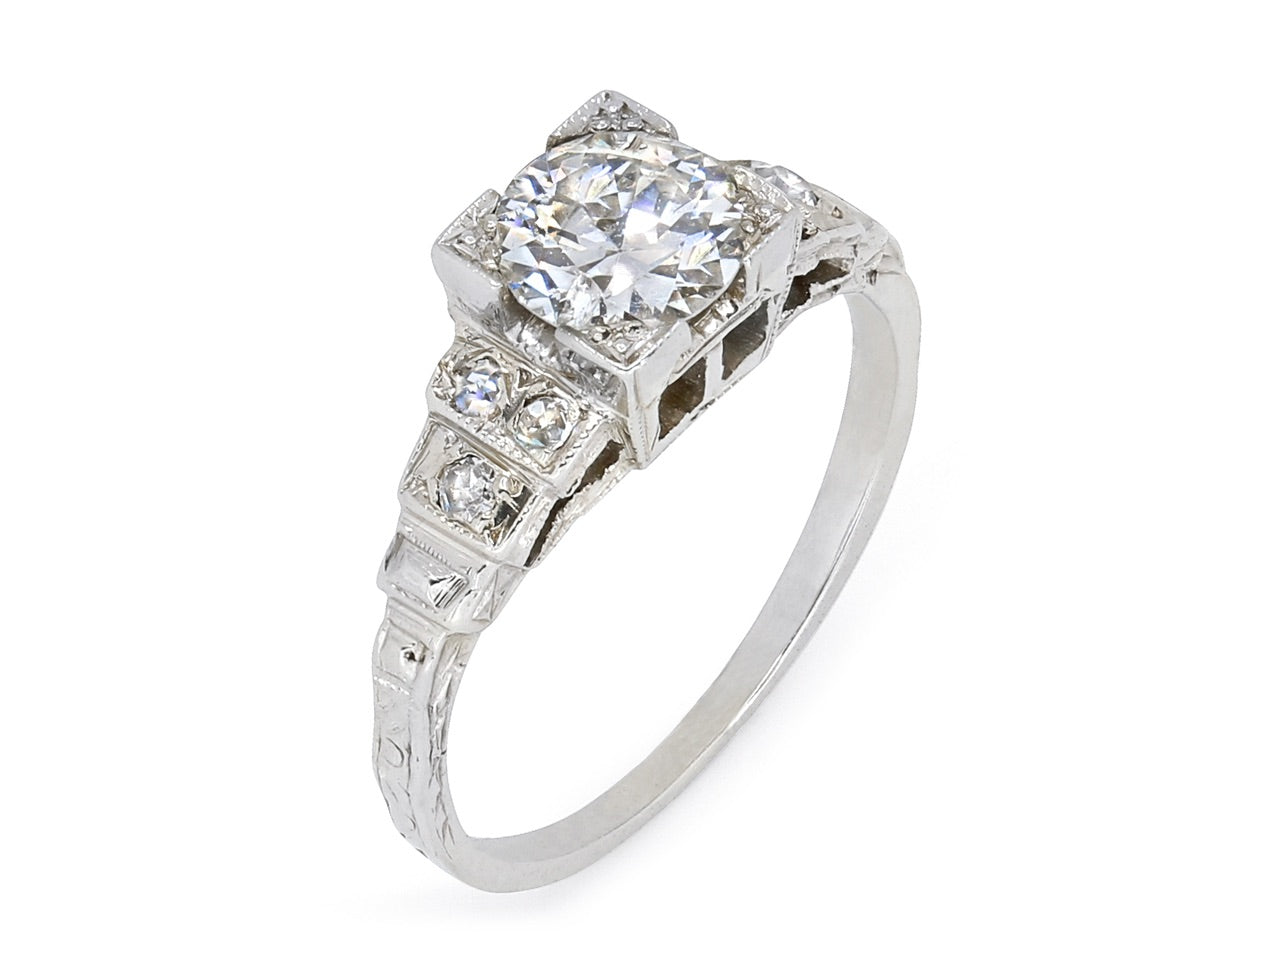 Antique Edwardian Diamond Ring in 18K White Gold